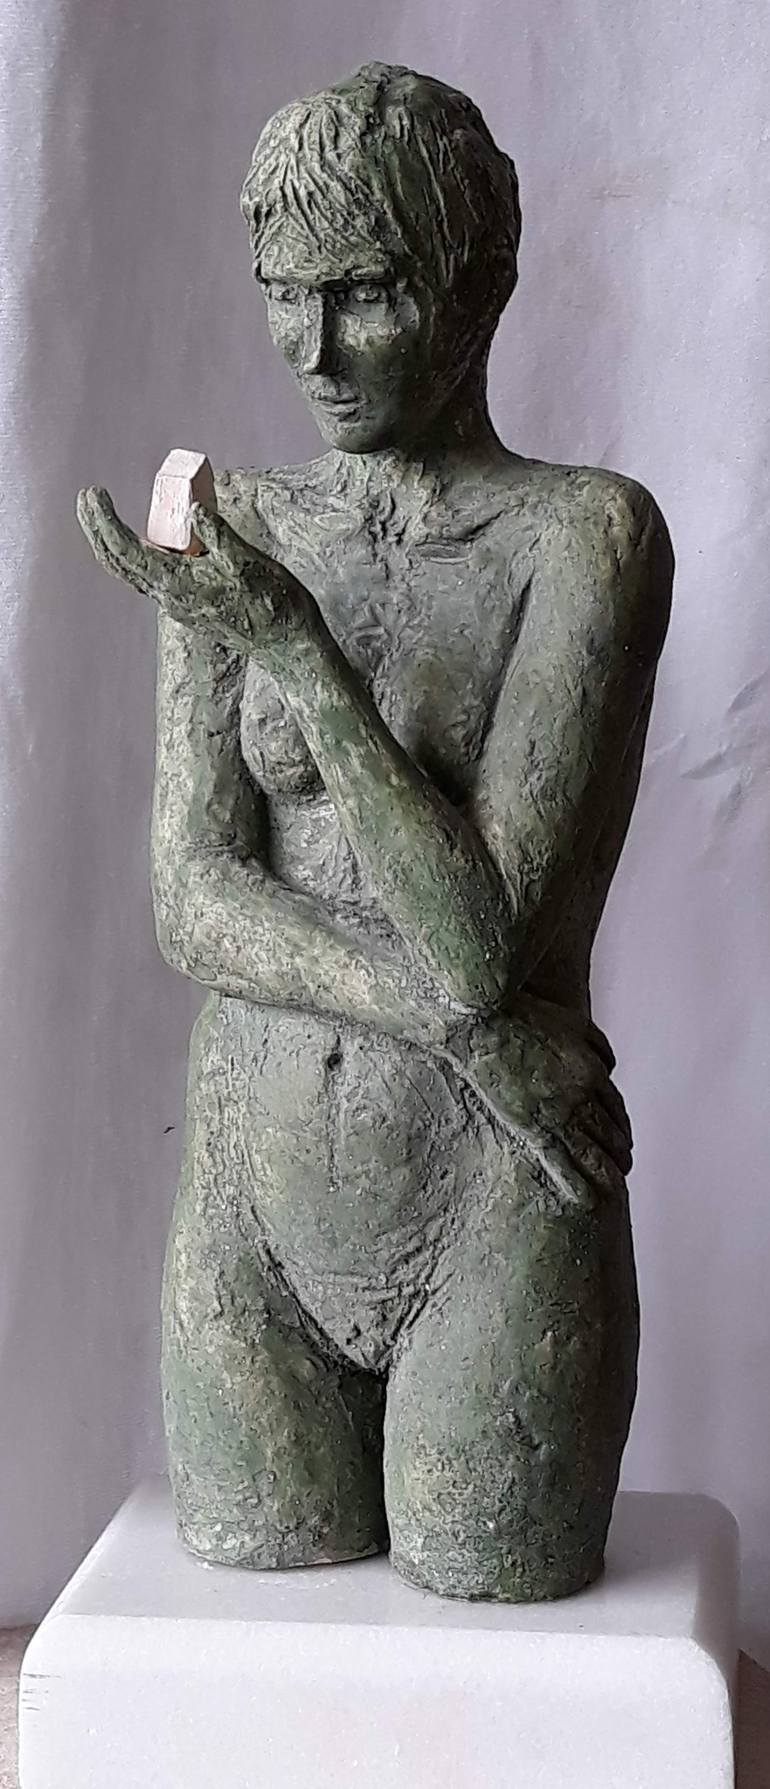 Original Conceptual Women Sculpture by Christakis Christou